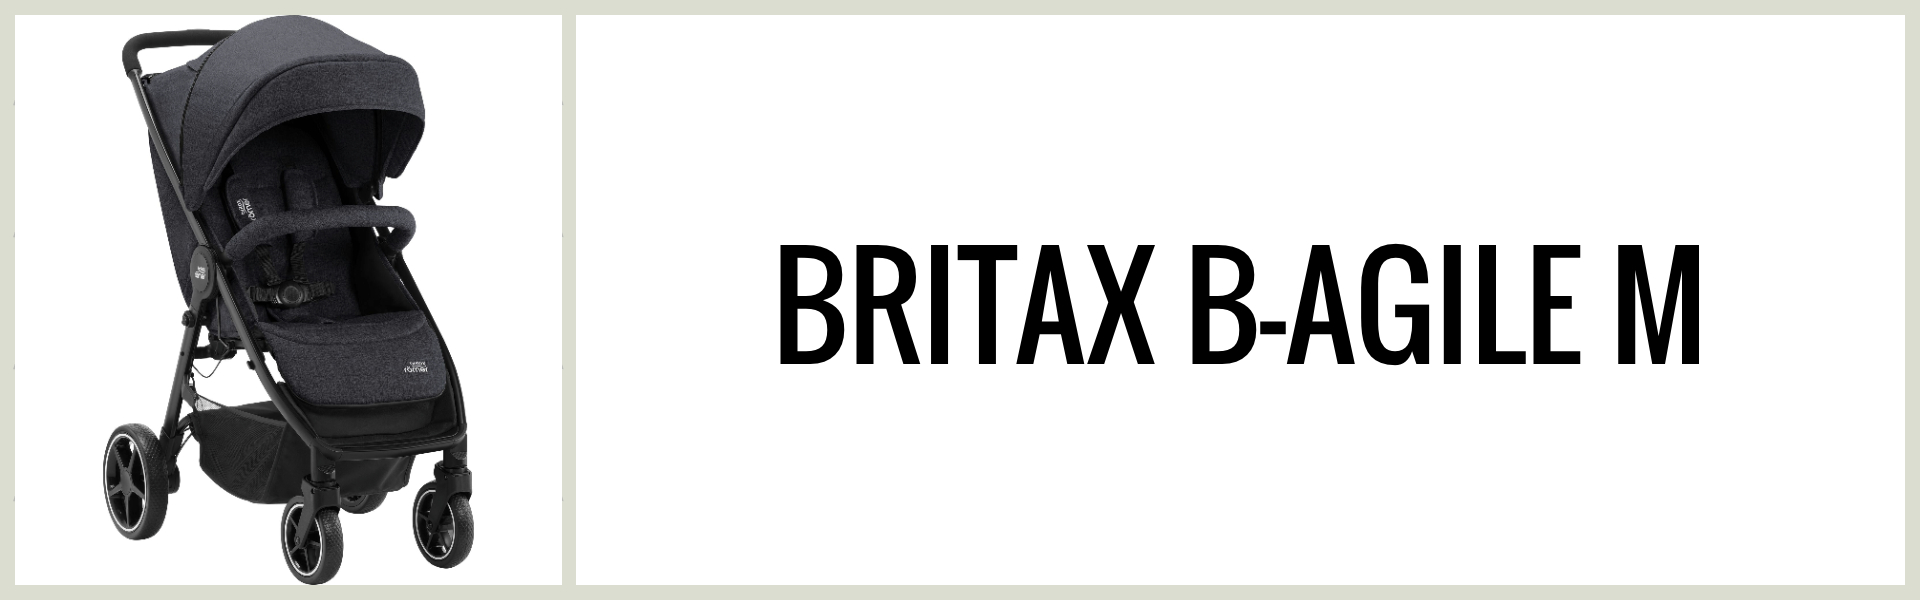 Omdöme: Hur är Britax B-Agile M som resevagn?